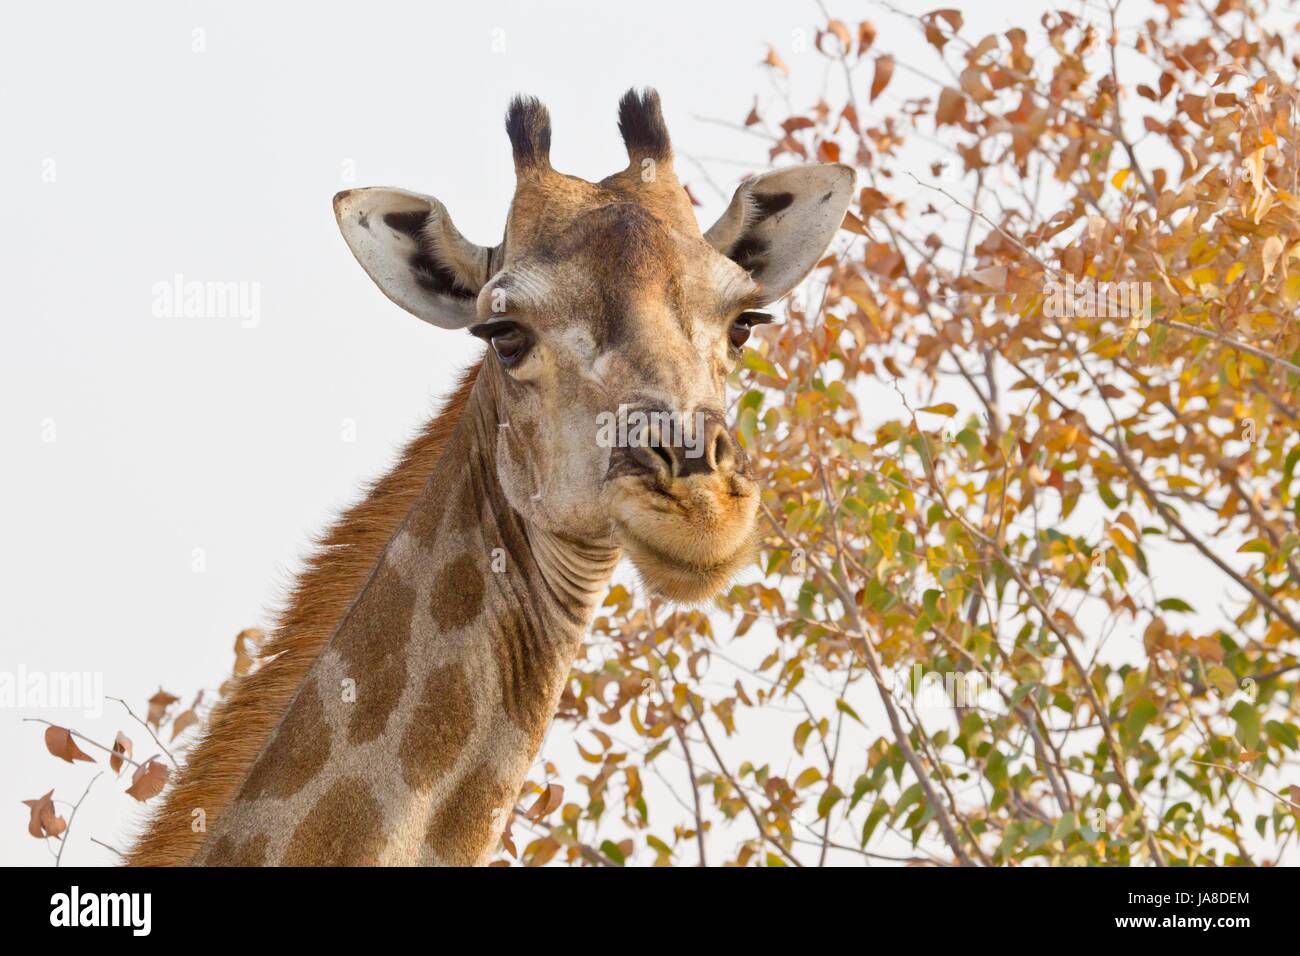 animal, africa, namibia, portrait, giraffe, animal, namibia, portrait, giraffe, Stock Photo